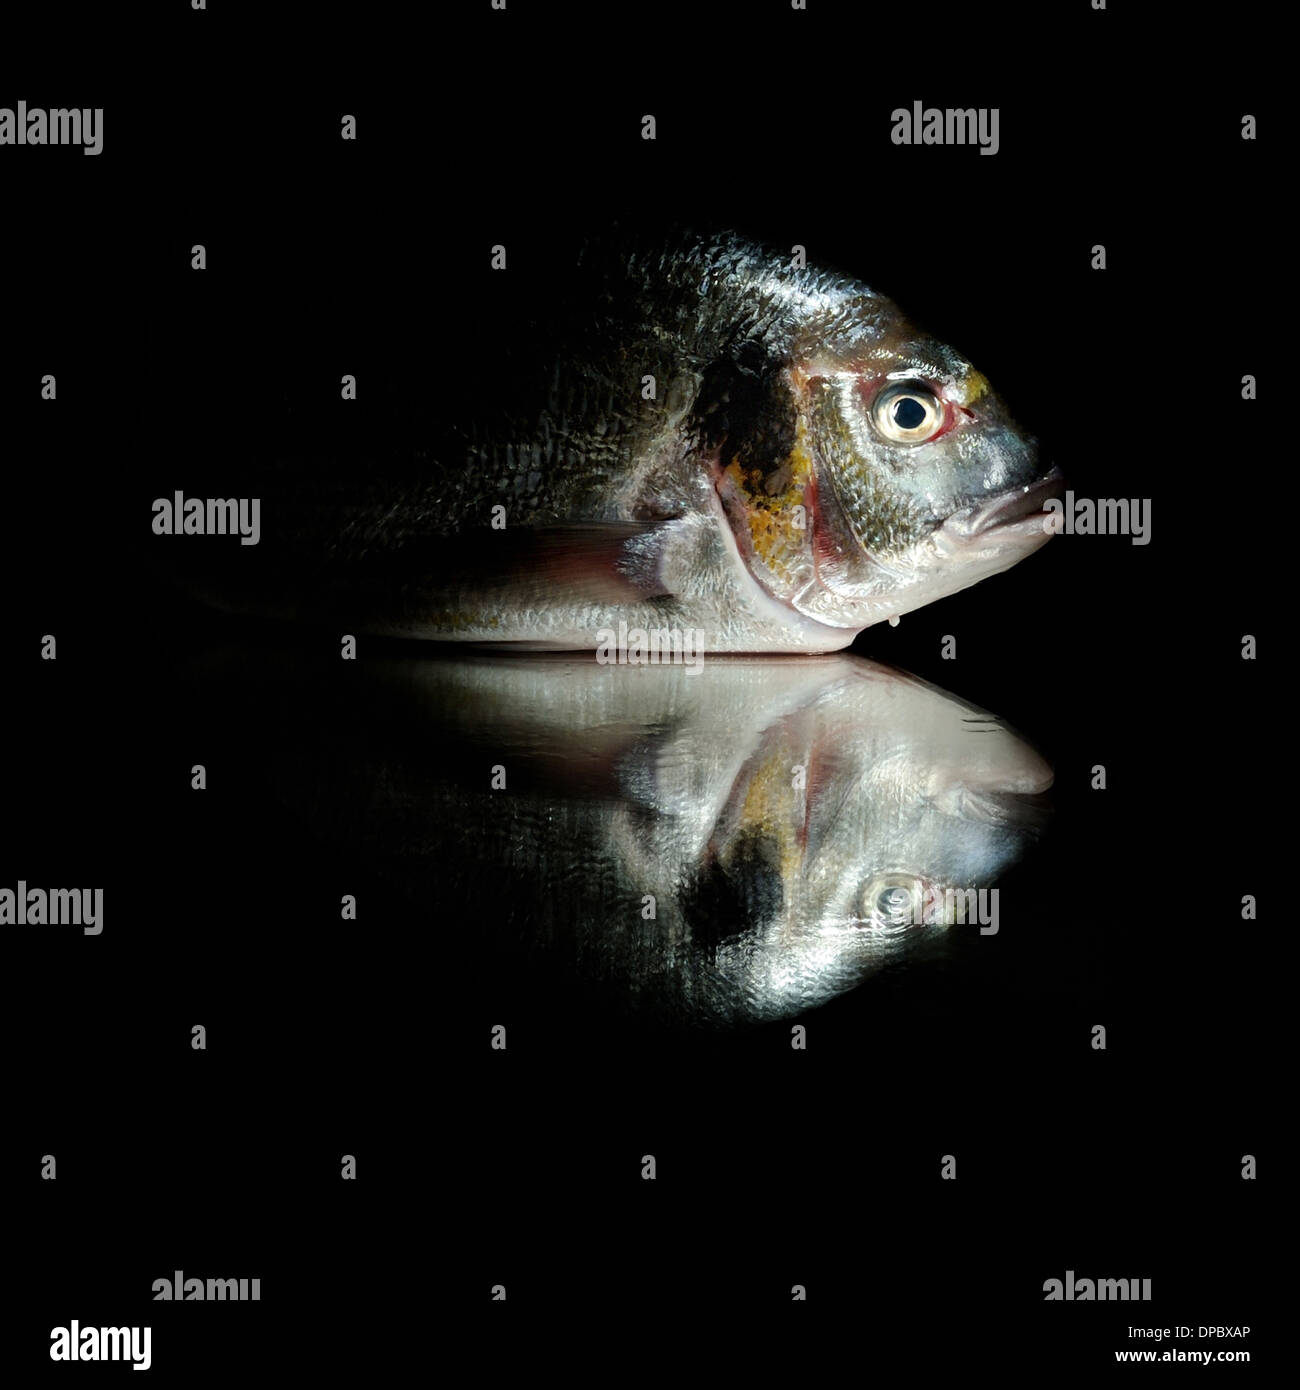 Gilt-head bream (Orata), close up, on mirror with black background. Fresh Sea Fish head. Stock Photo